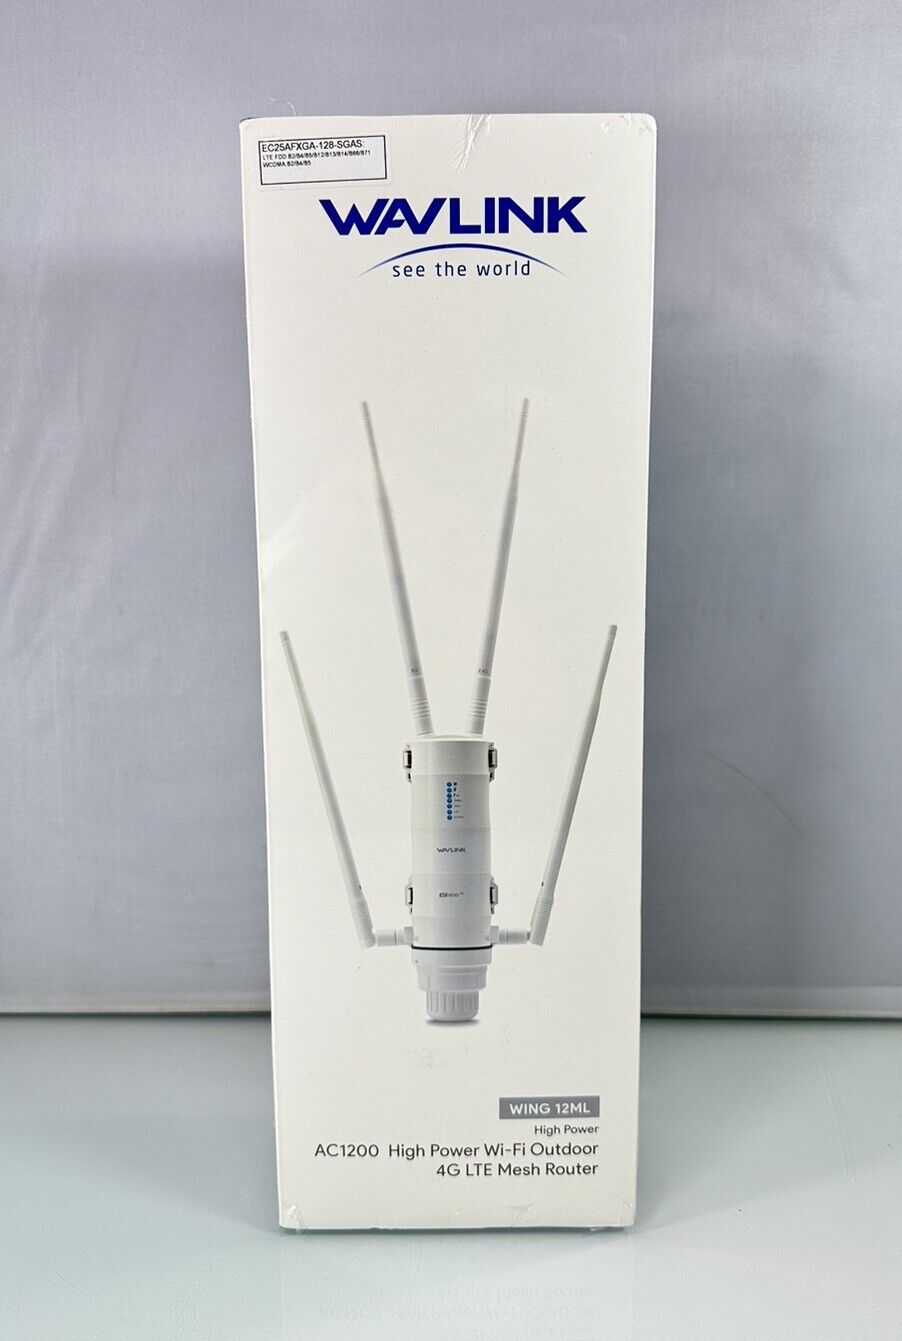 WAVLINK AC1200 Wing 12ML High Power WiFi Outdoor Wireless Access Point POE 4G